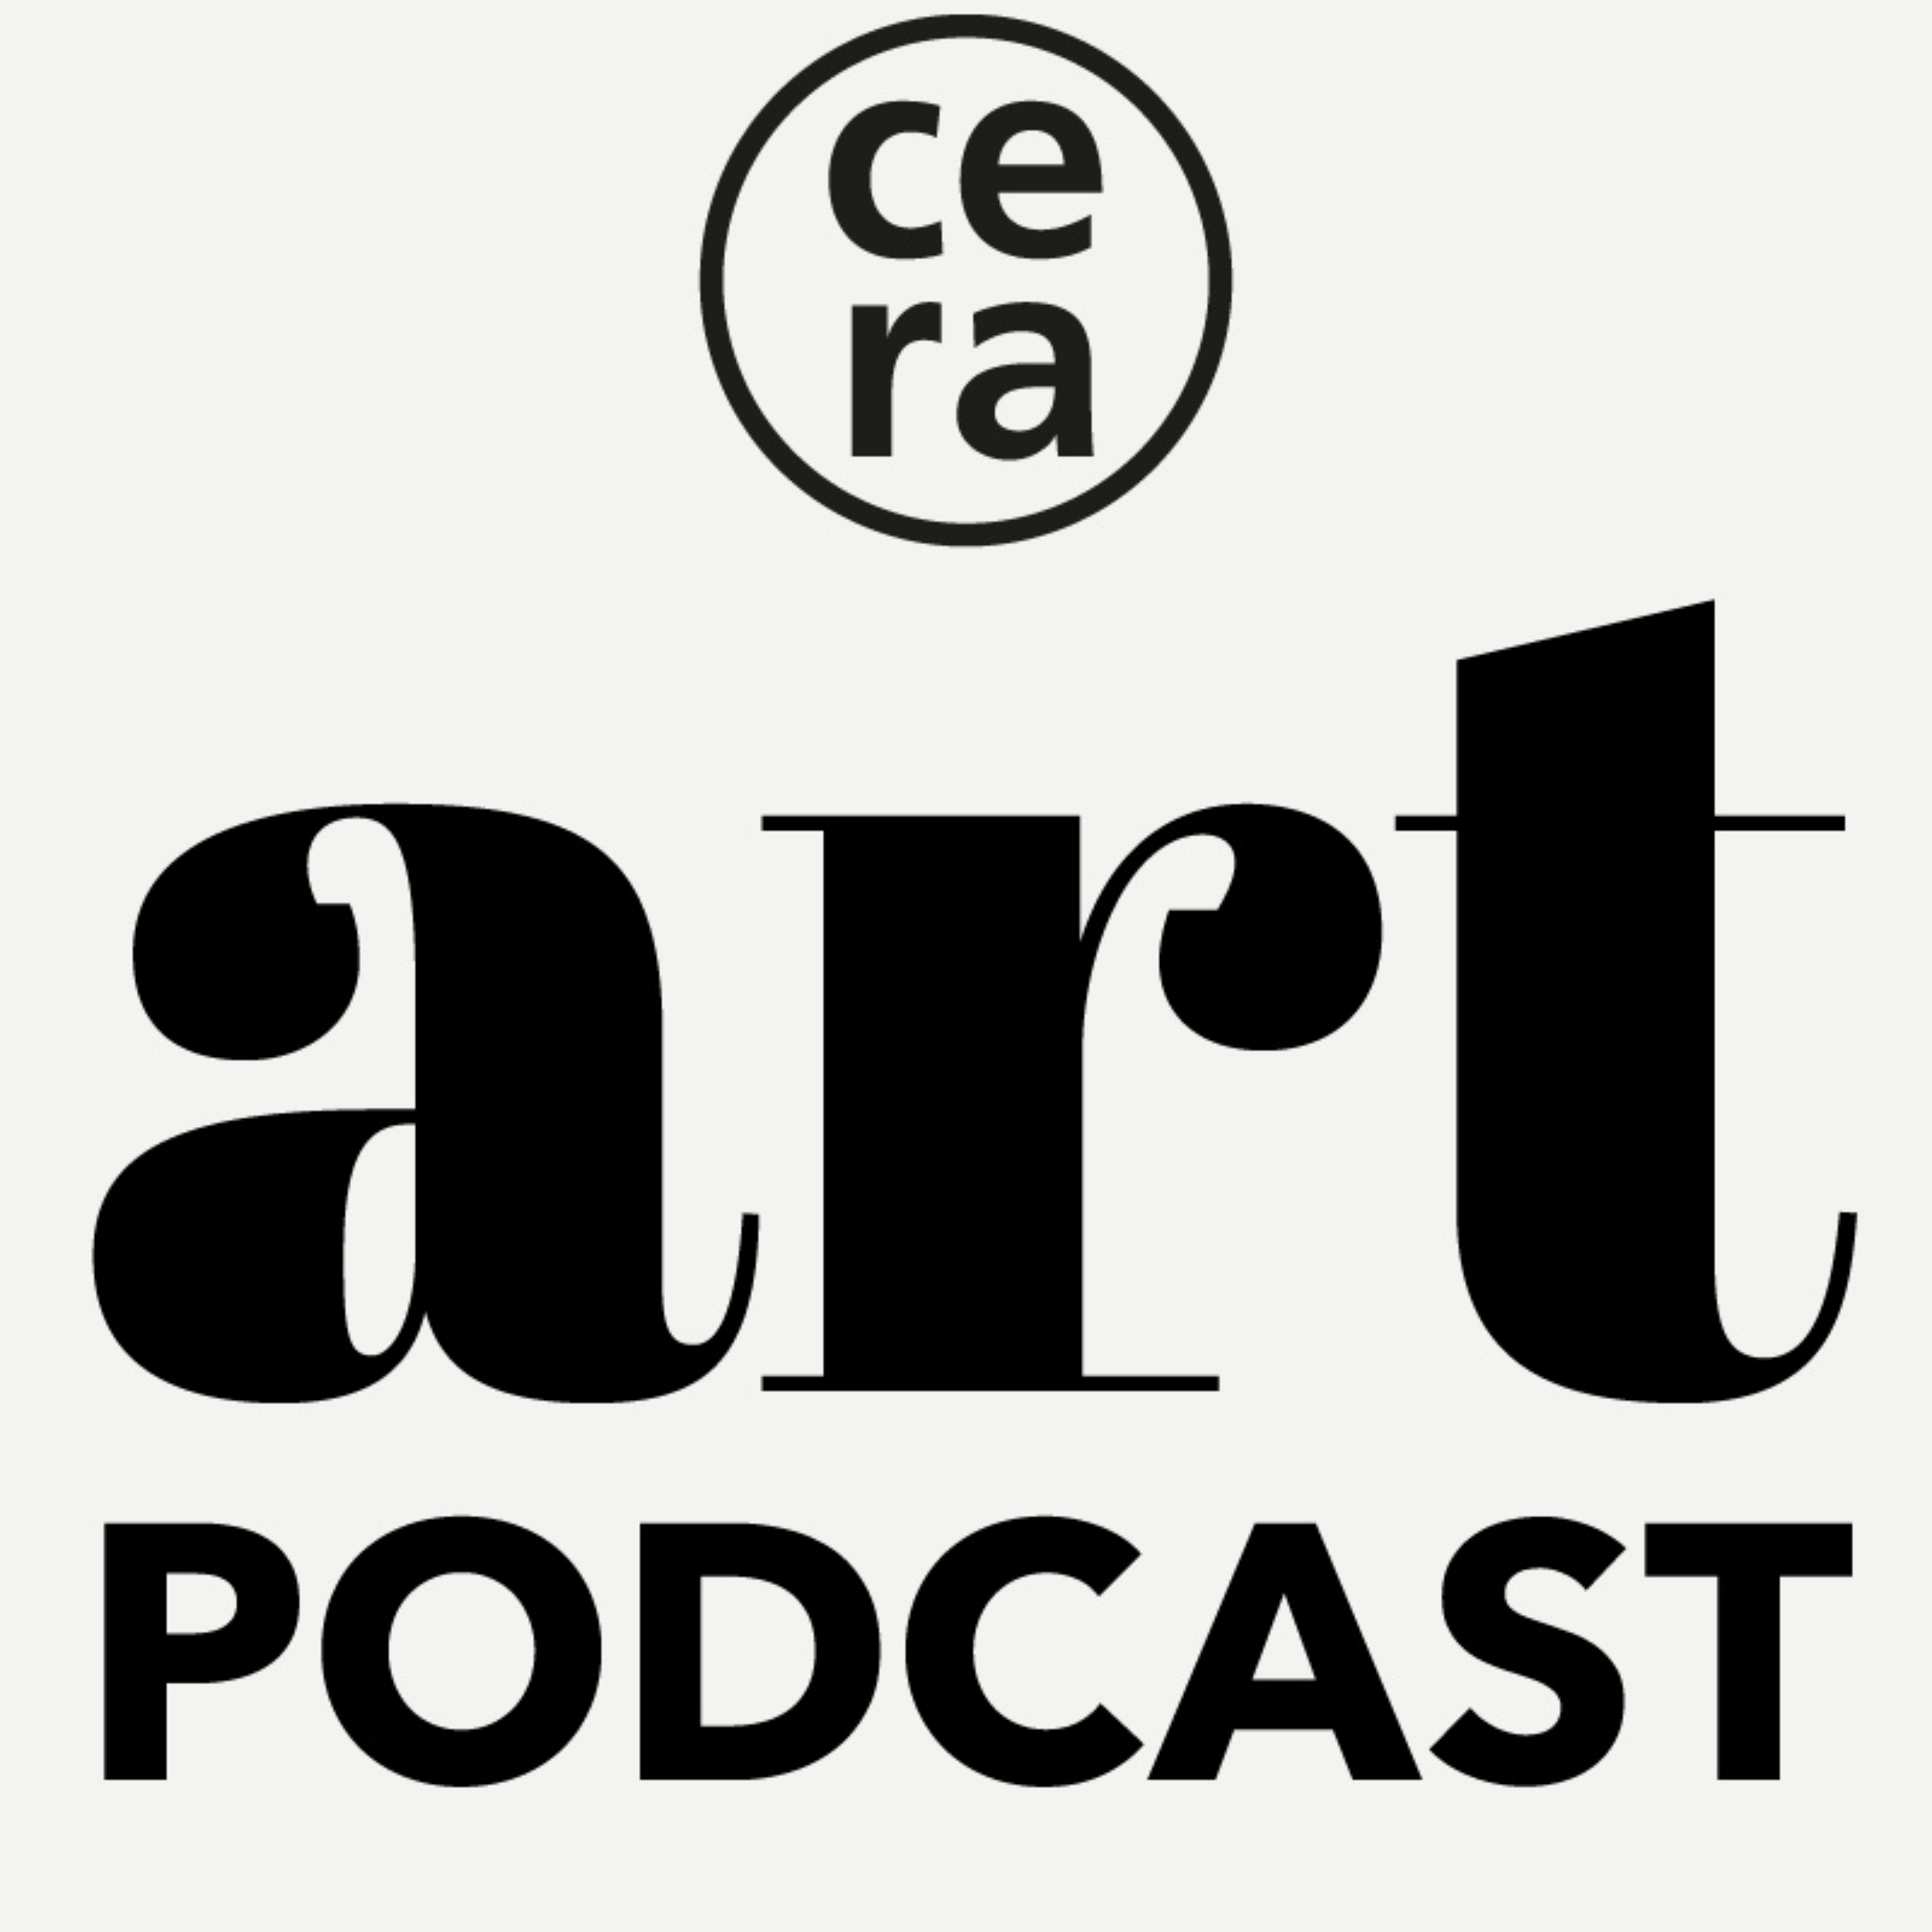 Cera Art Podcast